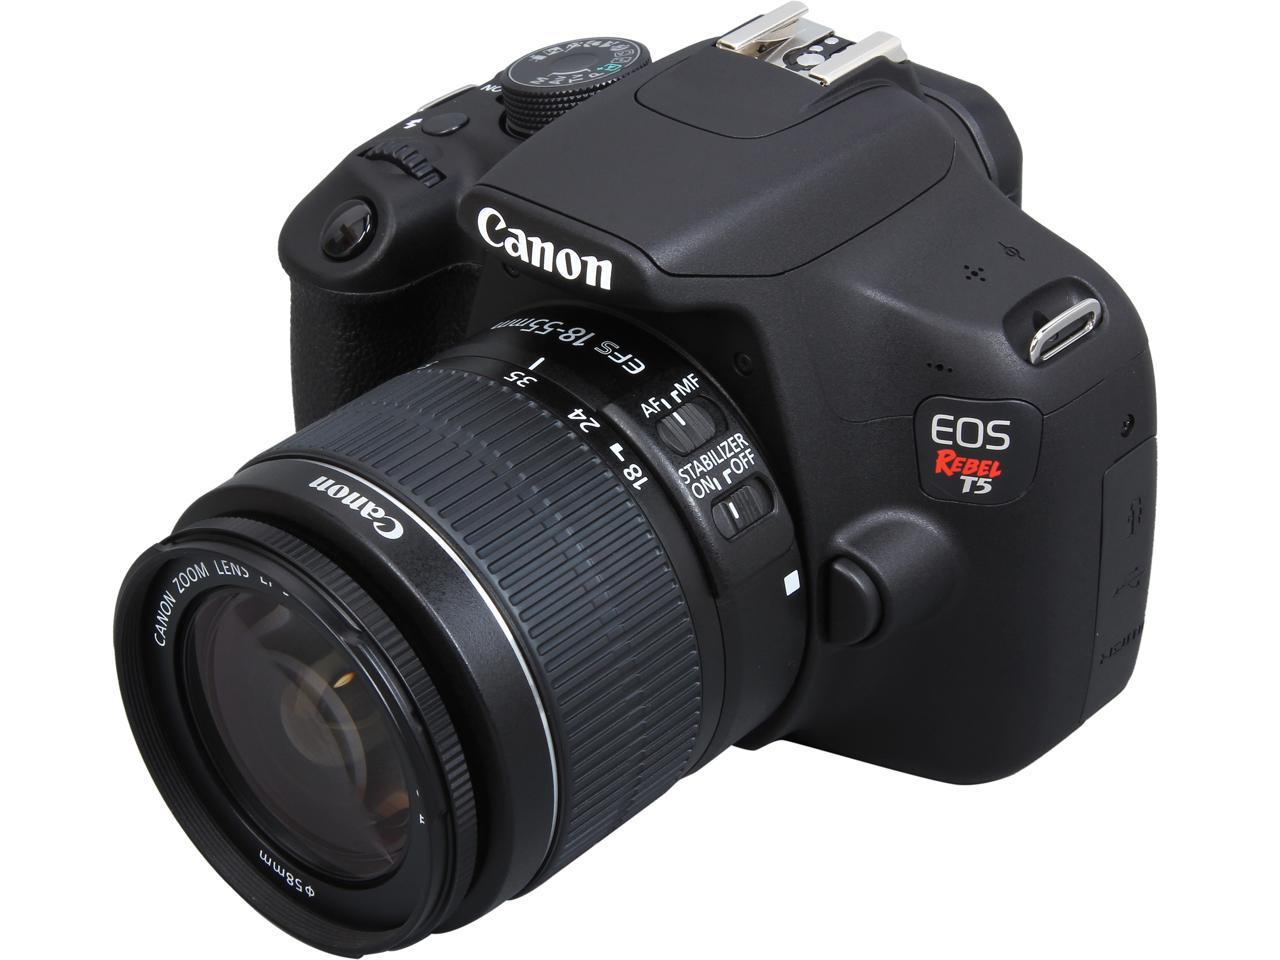 Canon Rebel T5 9126B003 Black Digital SLR Camera w/ EFS 1855mm IS II Lens